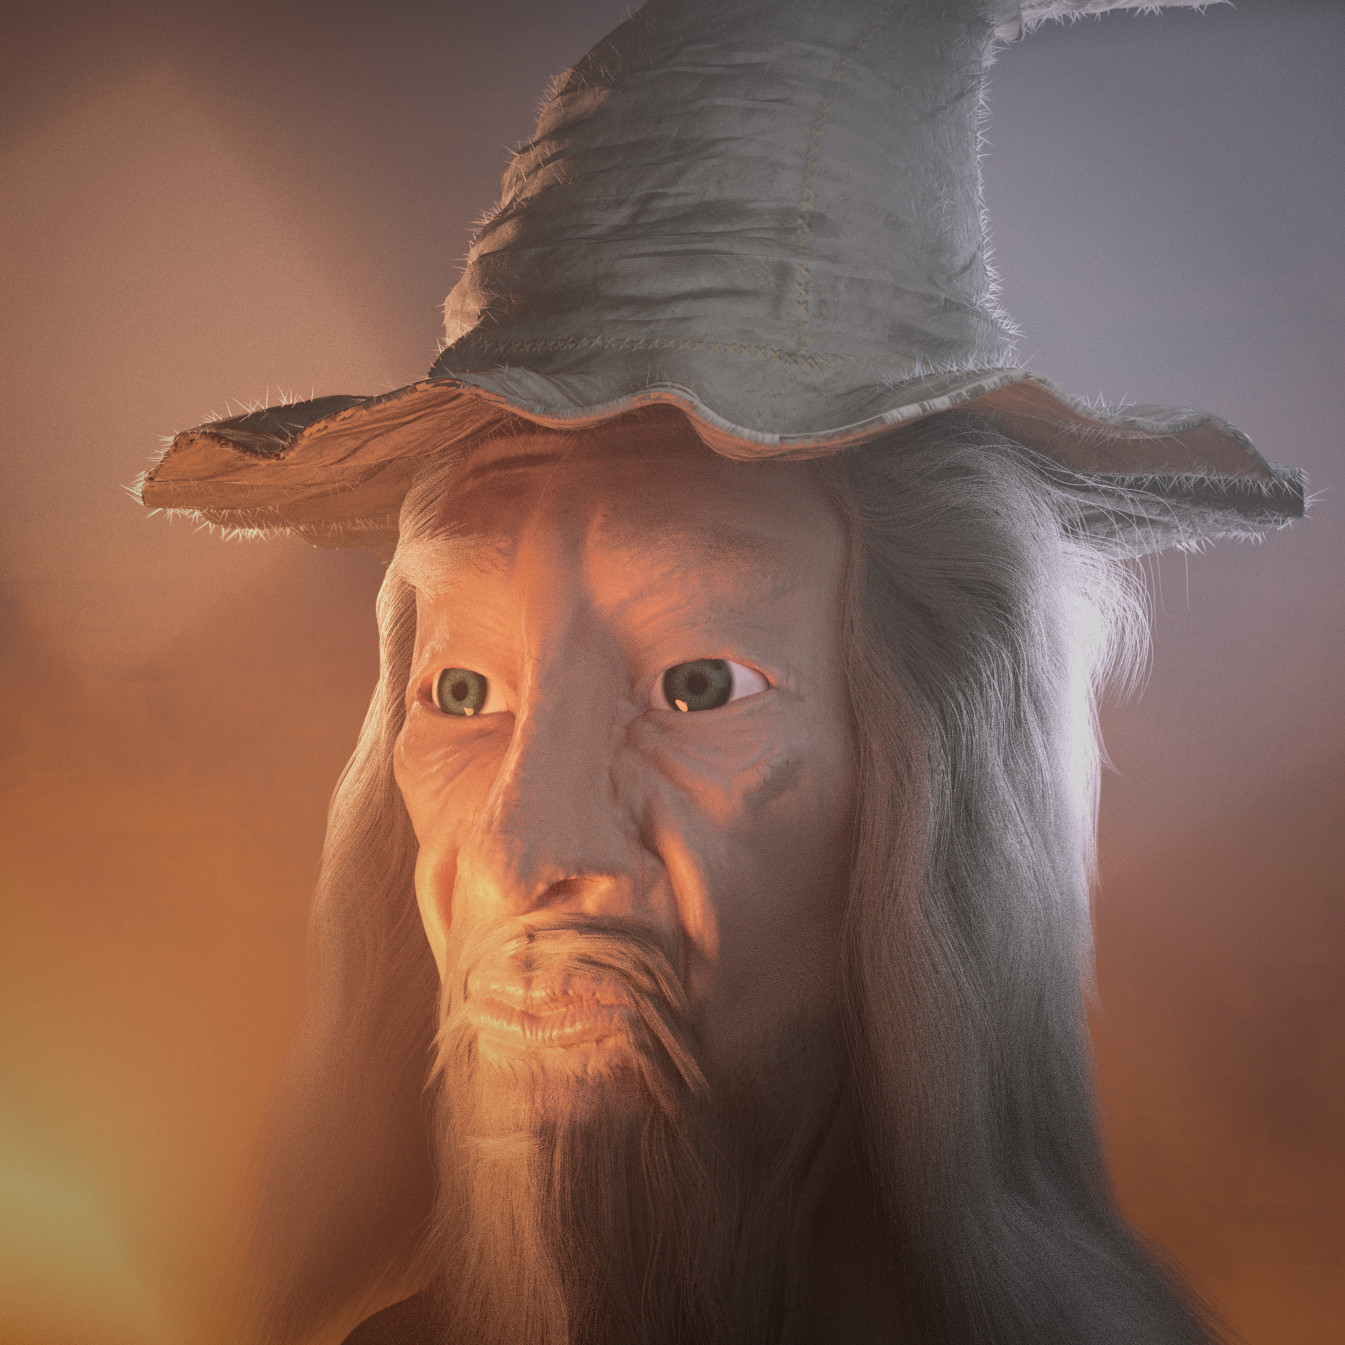 A digitally sculpted wizard head